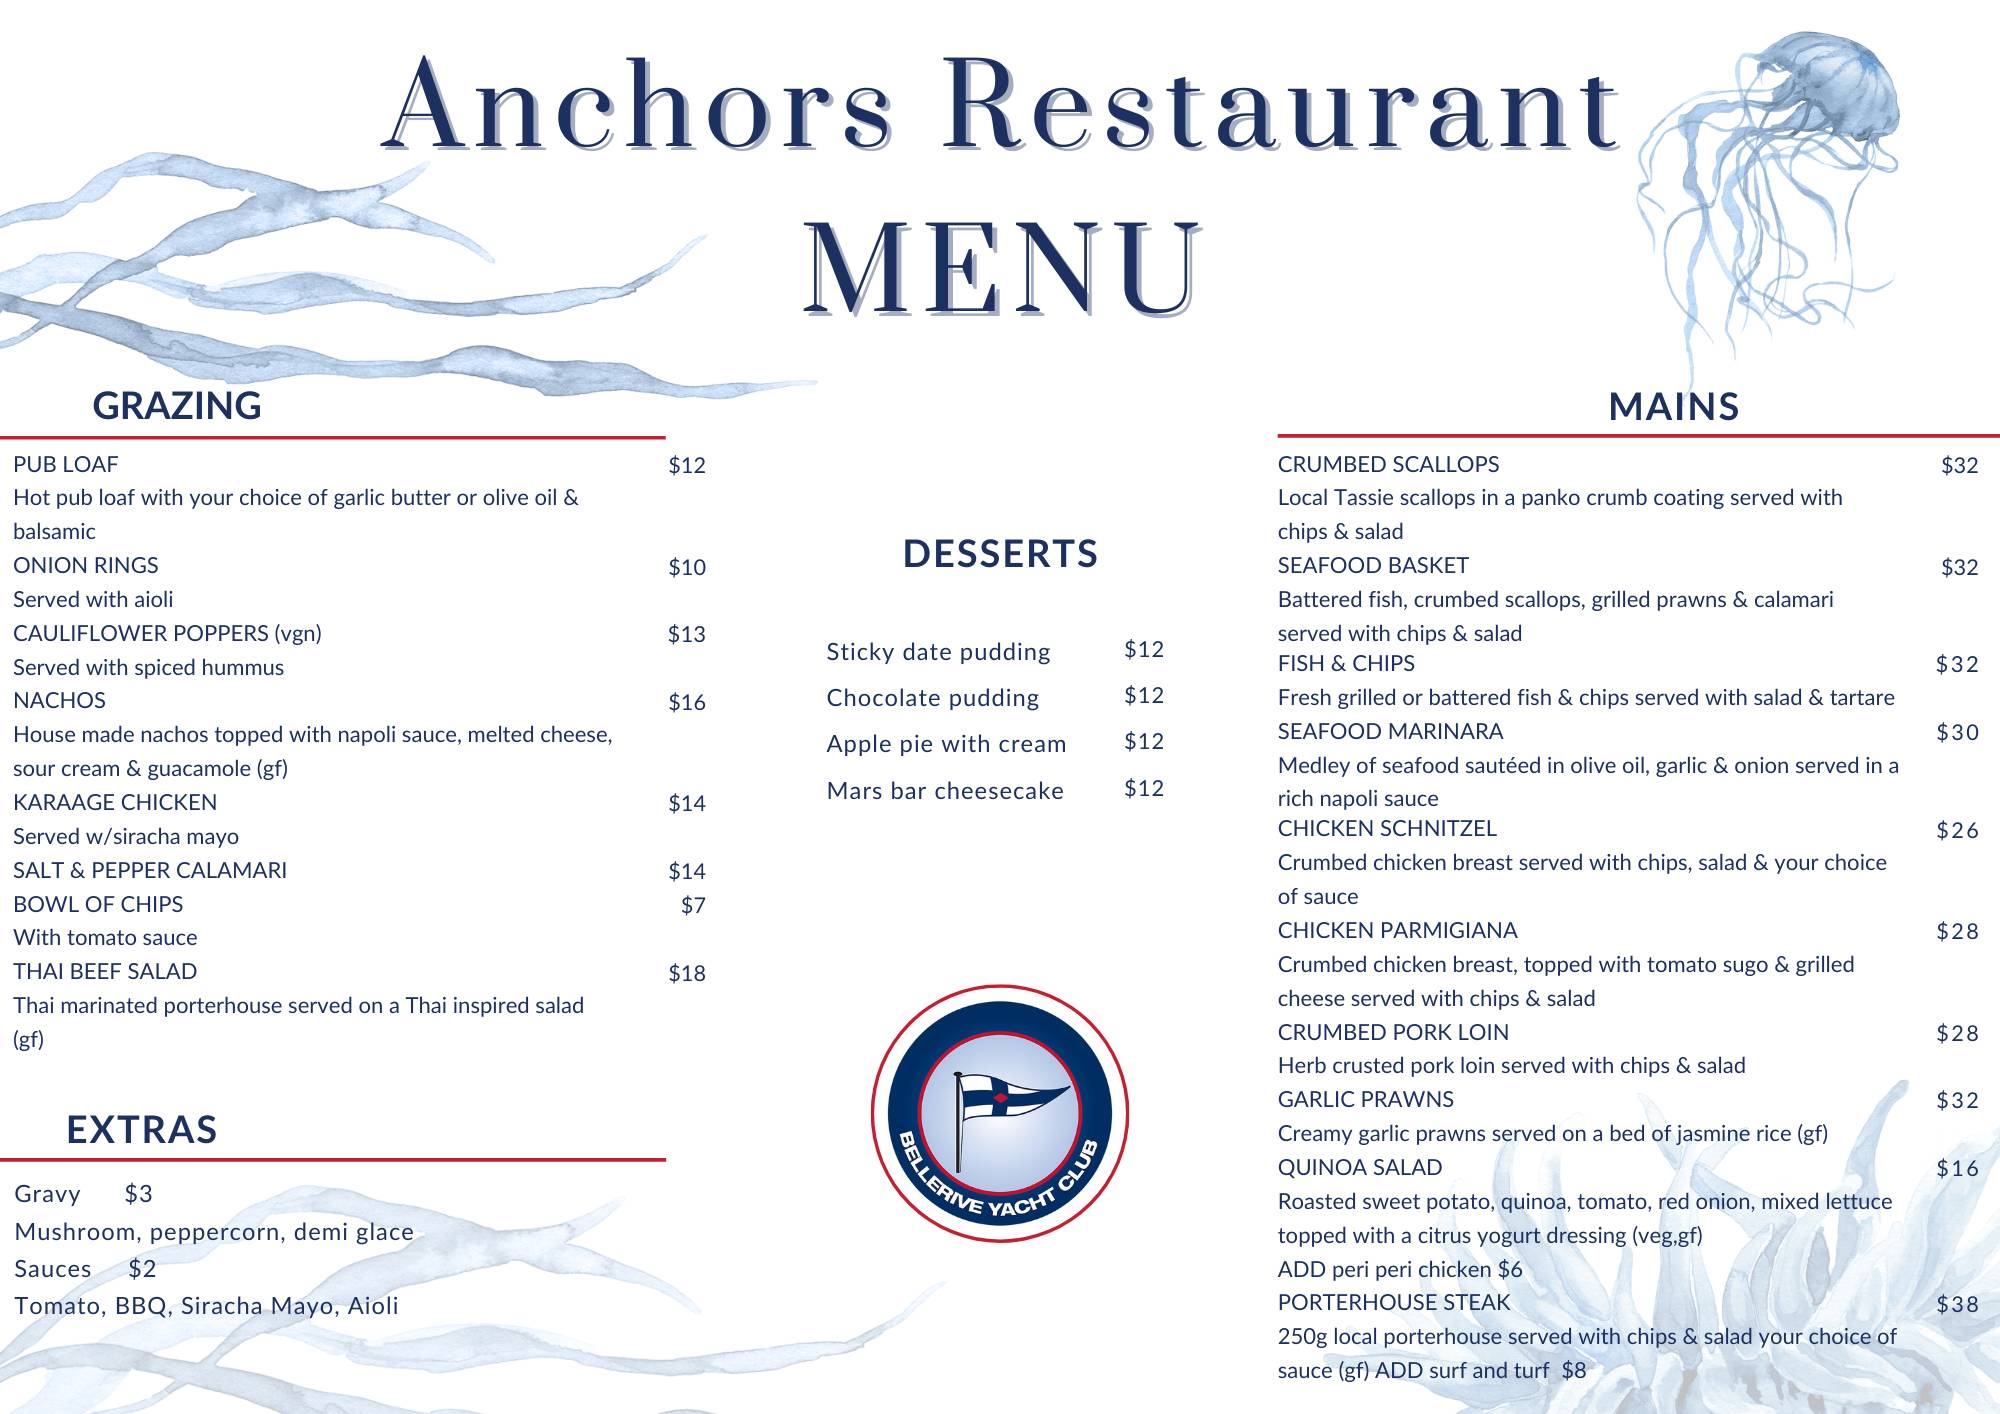 Anchors Restaurant menu